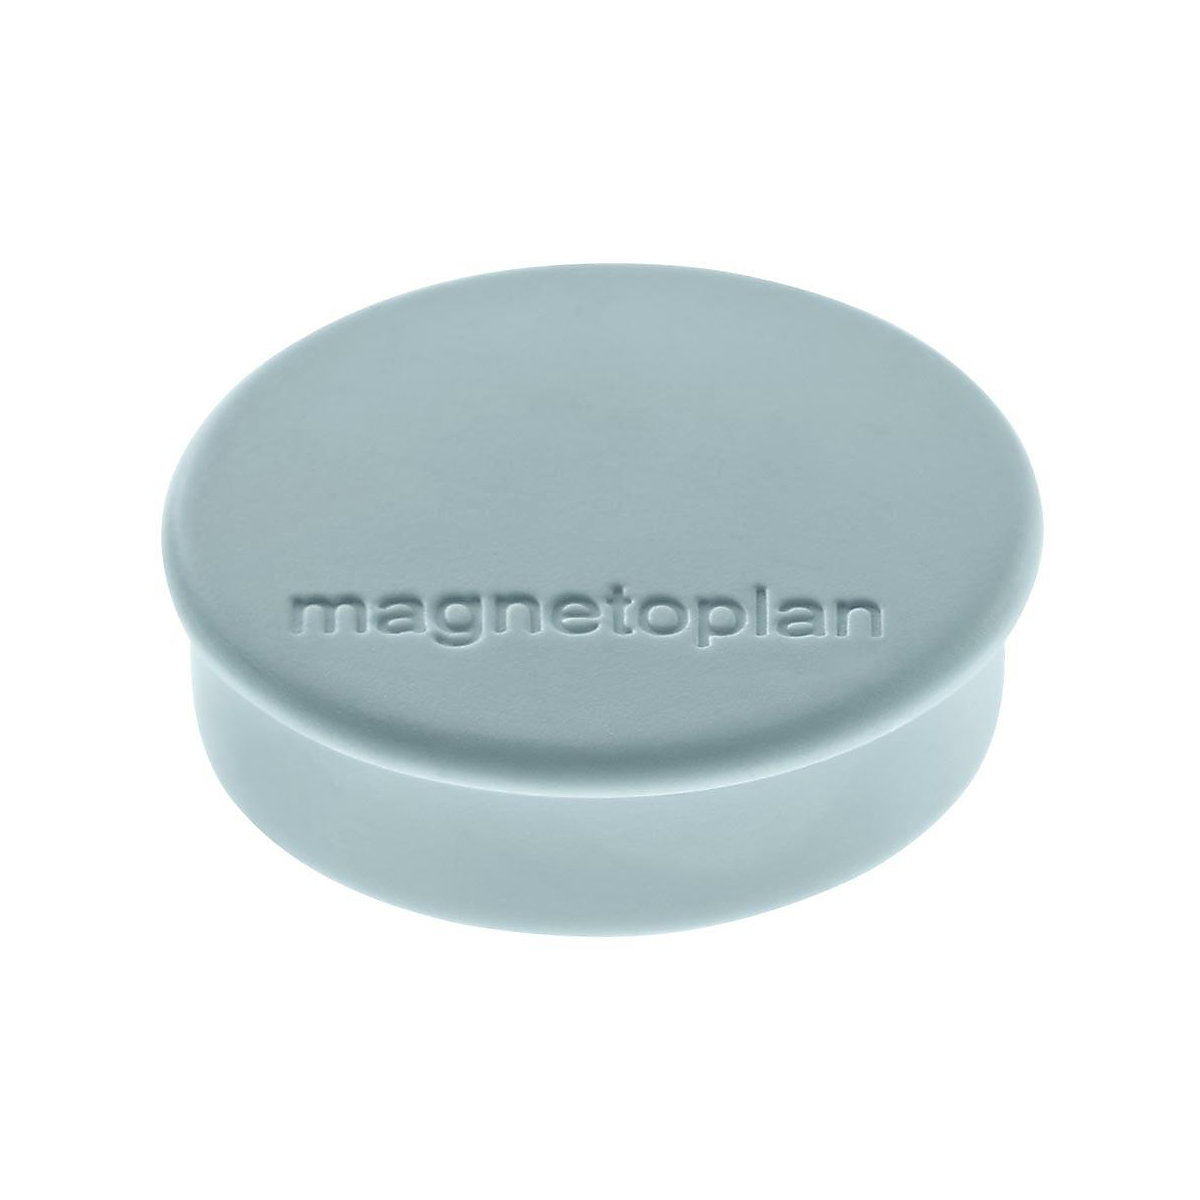 Magnet DISCOFIX HOBBY magnetoplan, Ø 25 mm, VE 100 Stk, blau-7